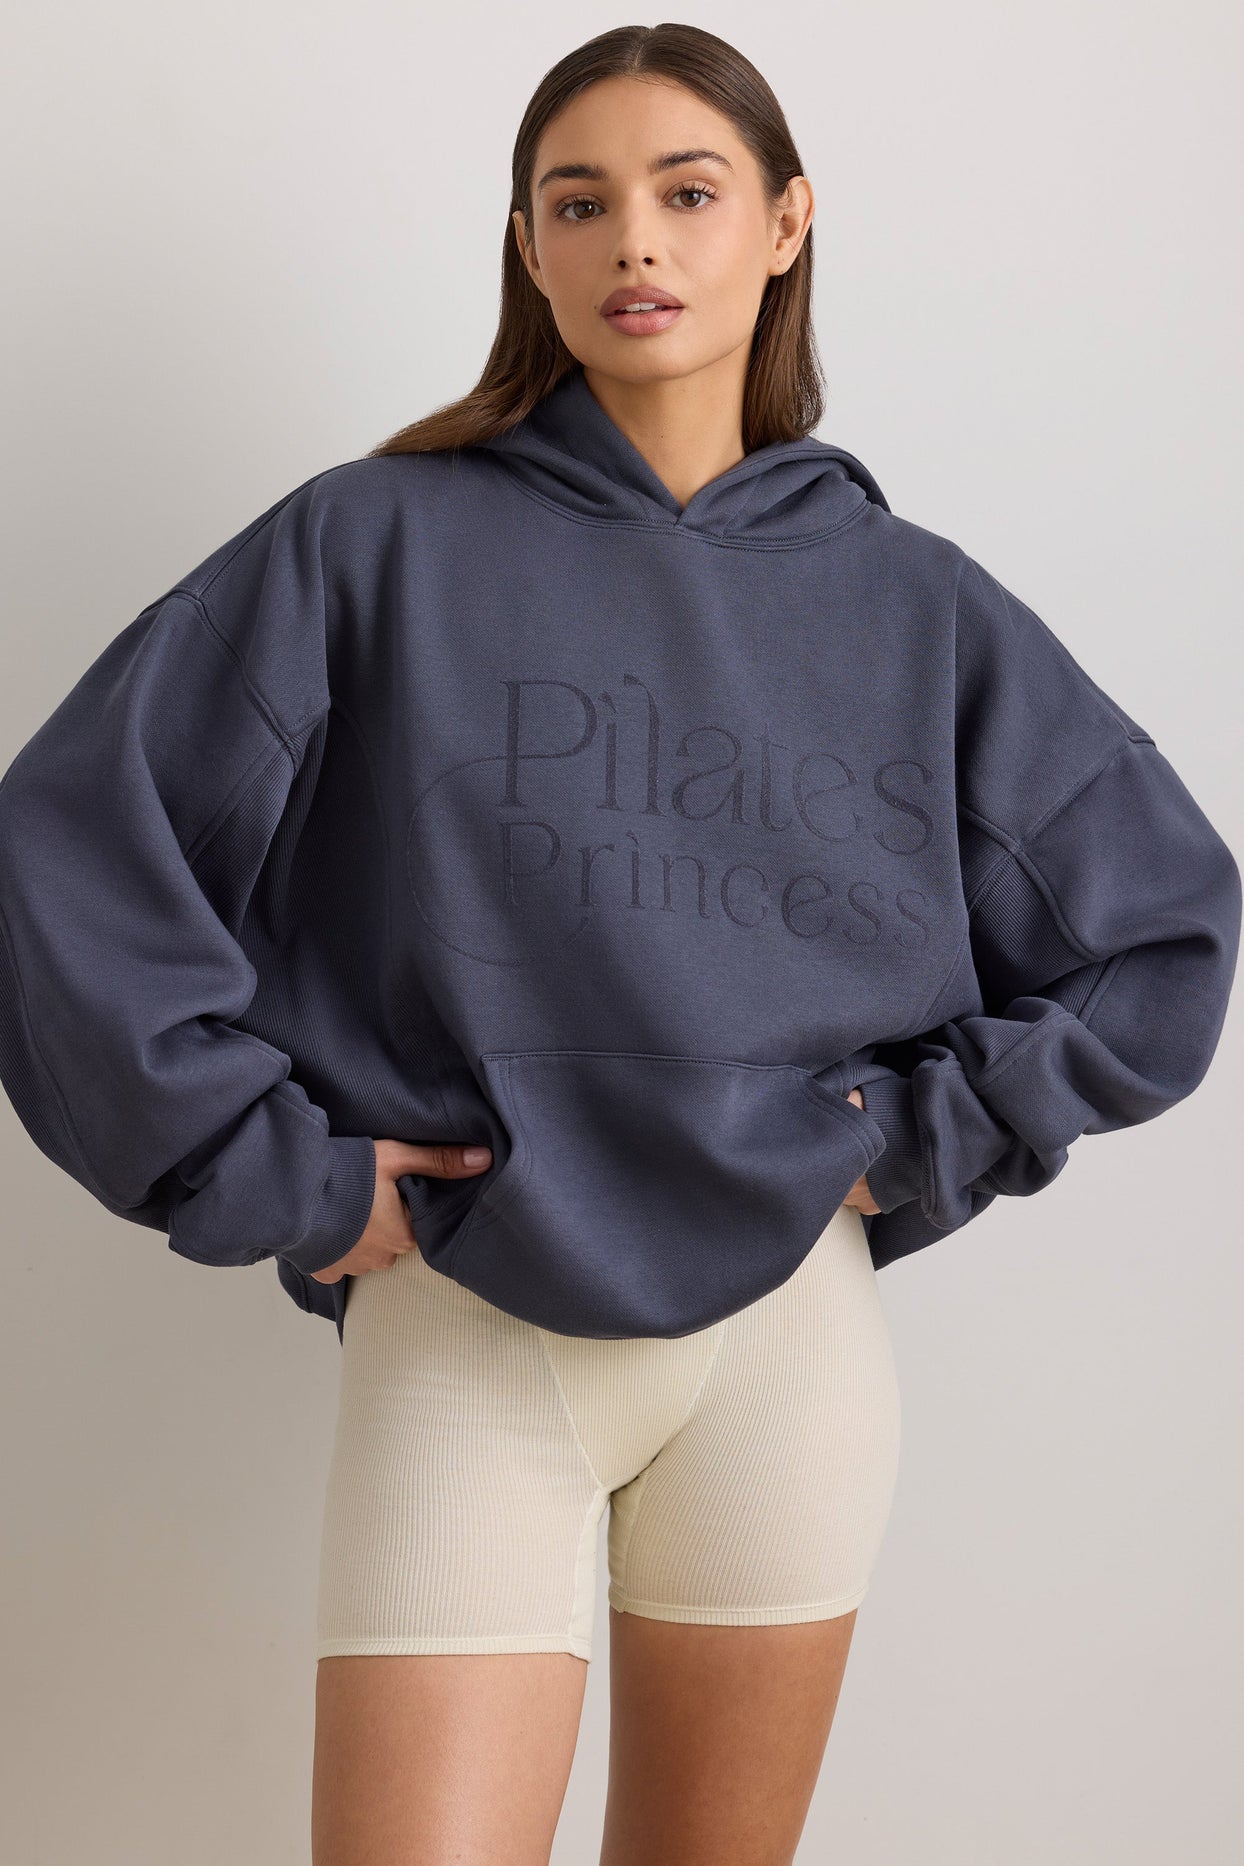 Pilates Princess Oversized Hooded Sweatshirt in Light Grey Melange